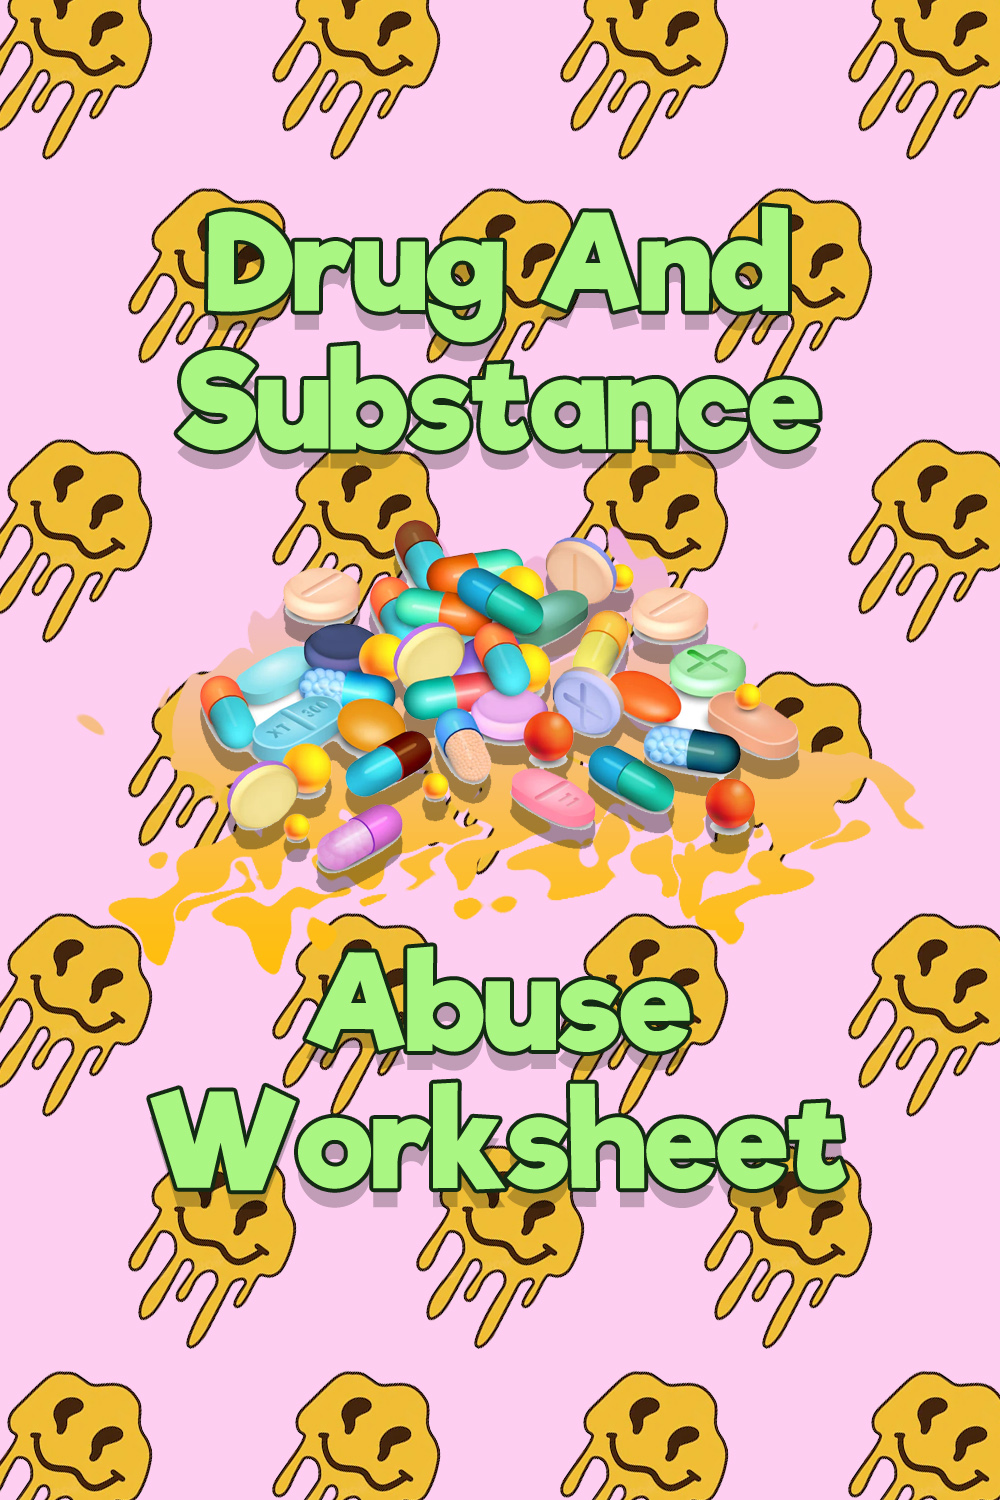 18 Images of Drug And Substance Abuse Worksheets